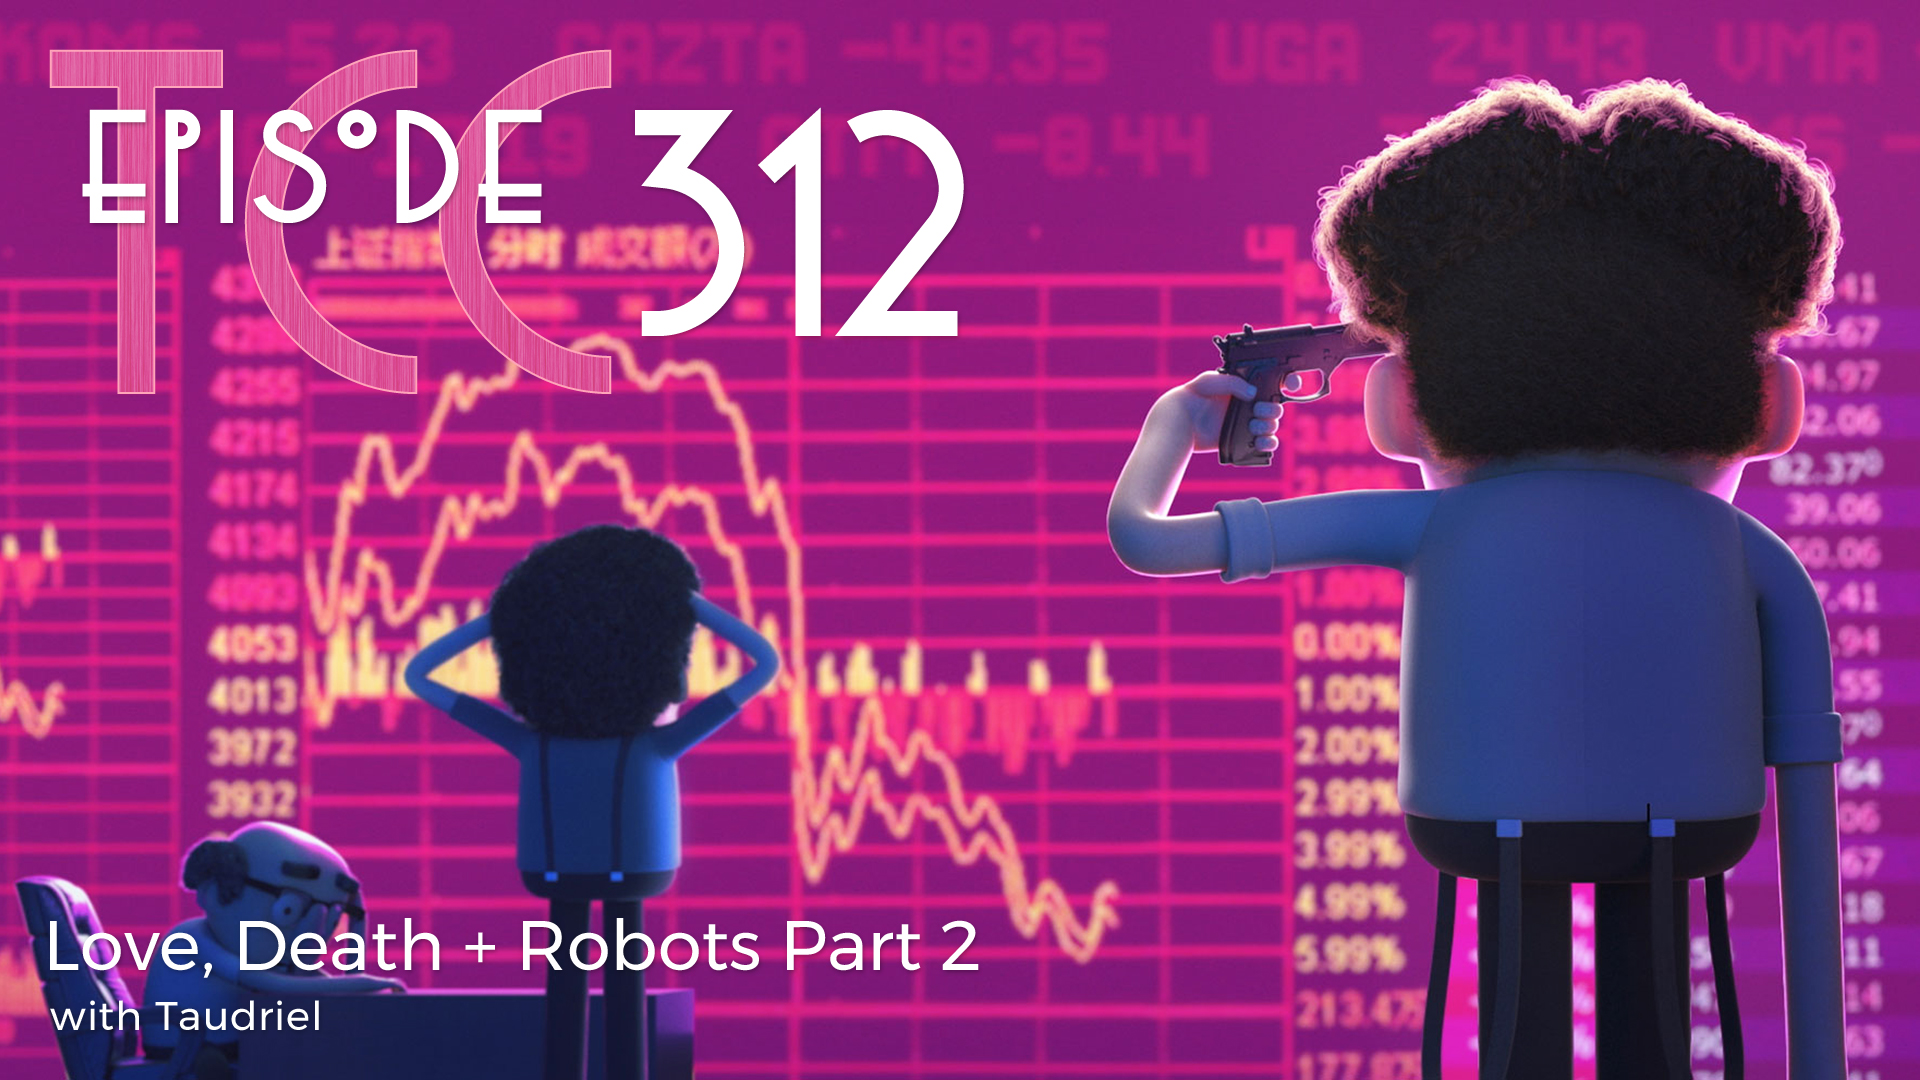 The Citadel Cafe 312: Love, Death + Robots Part 2